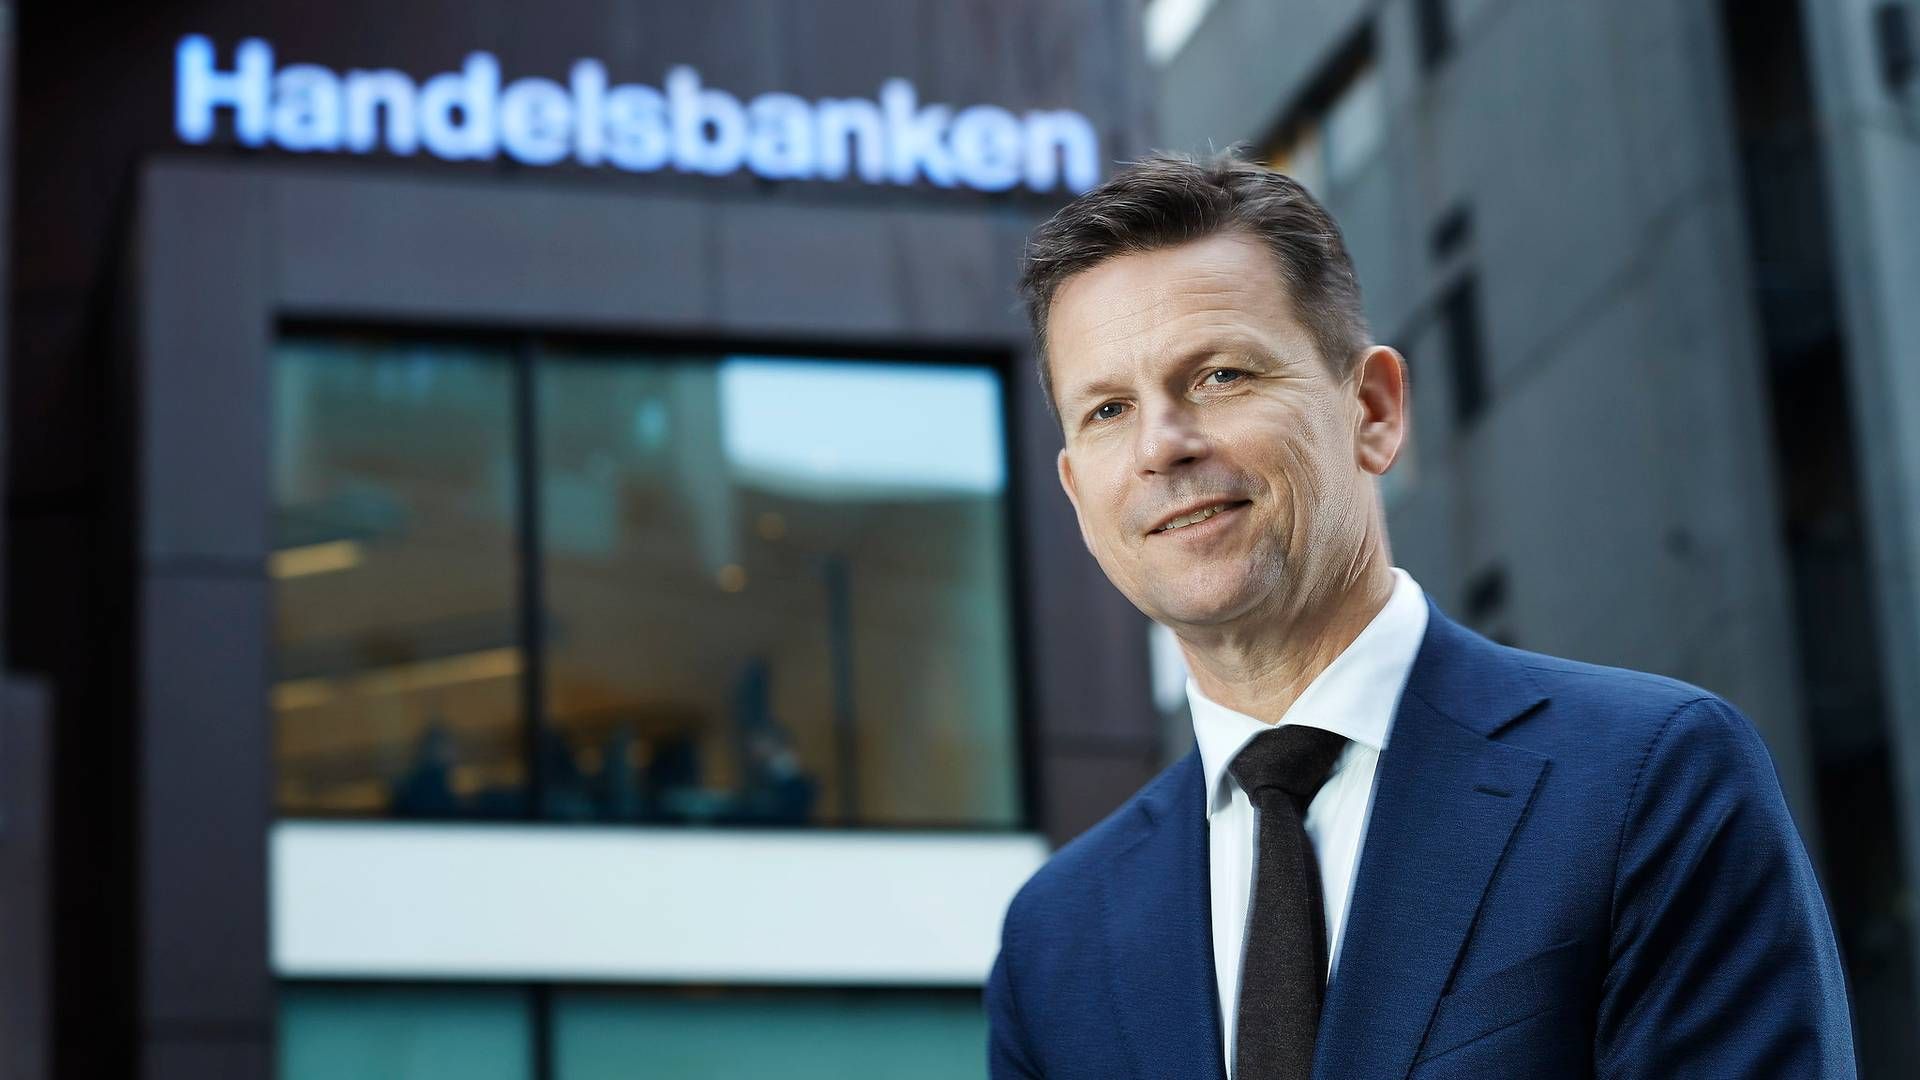 – HISTORISK LAV: Landsjef i Handelsbanken I Norge, Arild Andersen, sier at bankenes fortjeneste på utlån er historisk lav.